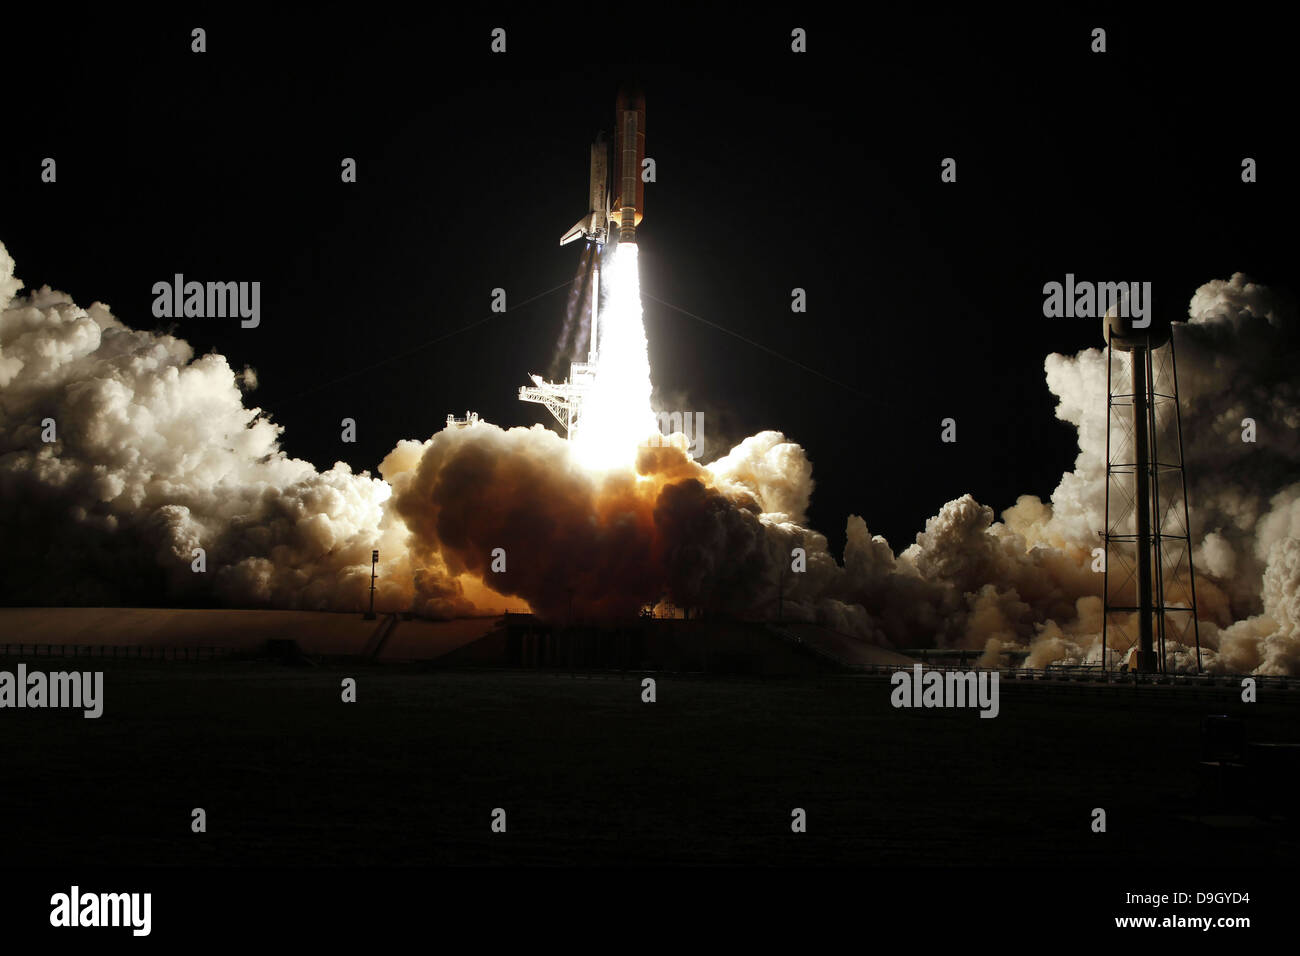 Space Shuttle Discovery abhebt von Launch Pad 39A am Kennedy Space Center in Florida, auf der Mission STS-131. Stockfoto